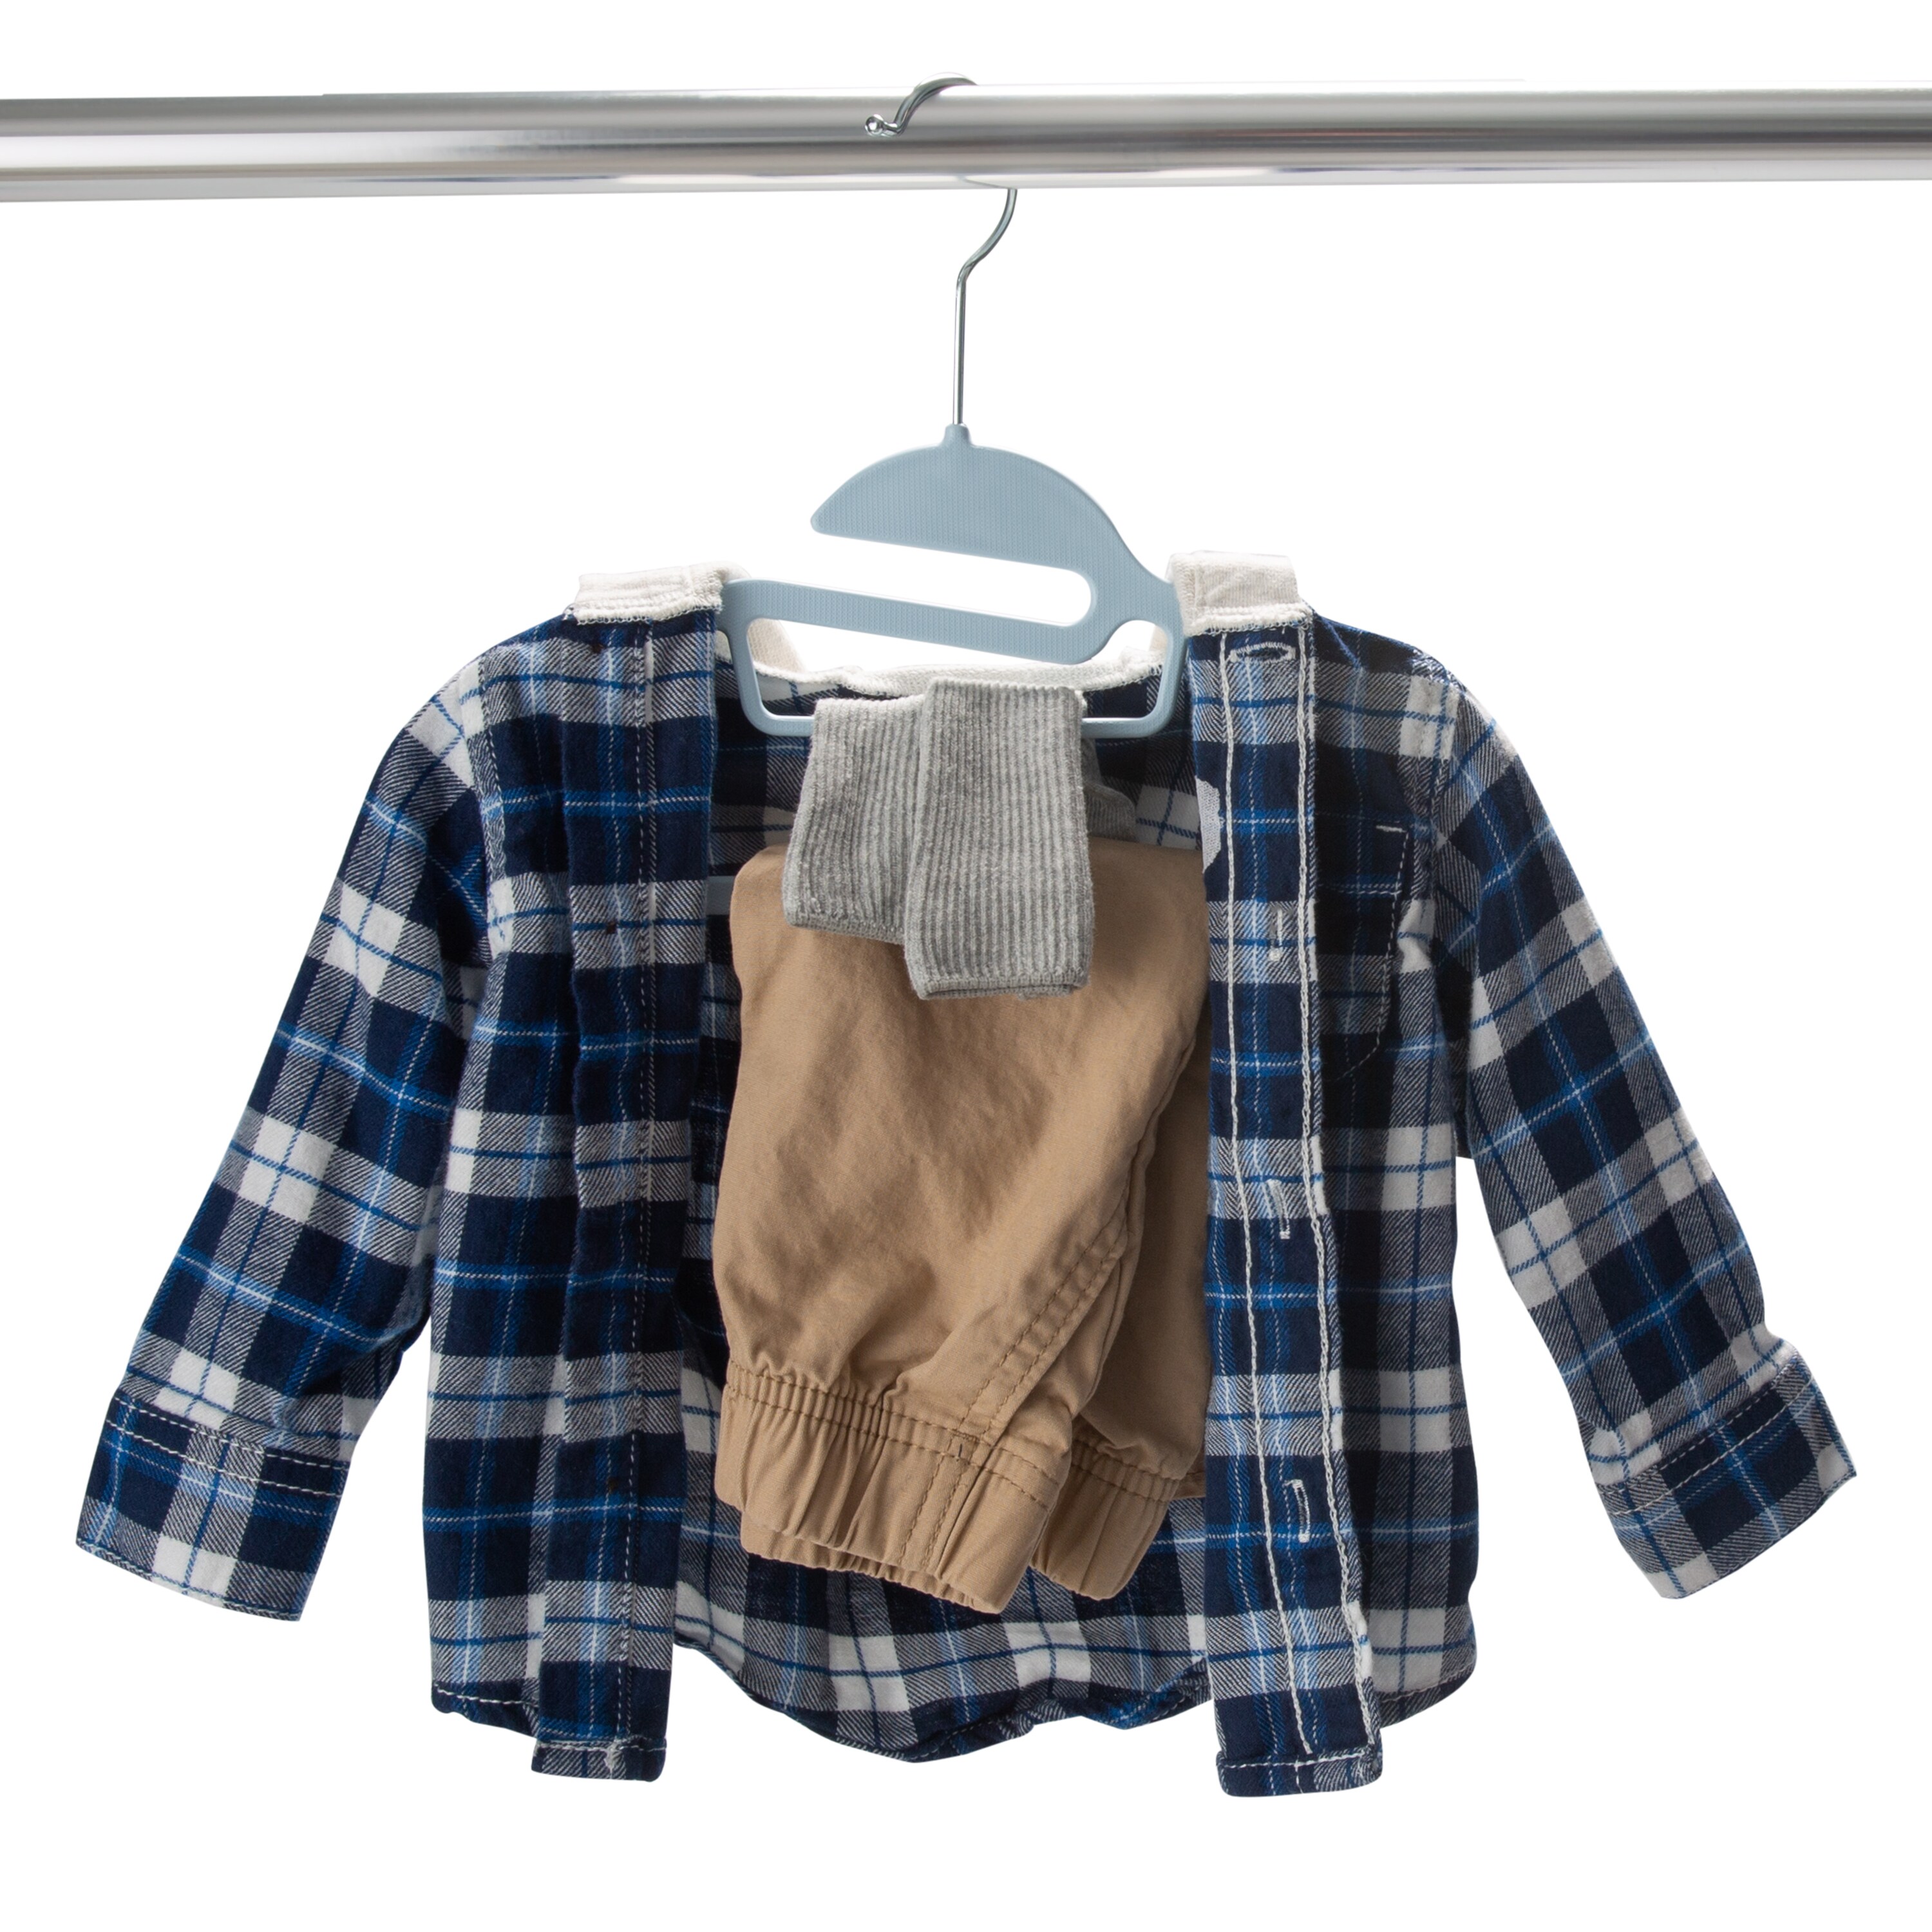 Simplify 10-Pack Plastic Non-slip Grip Clothing Hanger (Blue) in